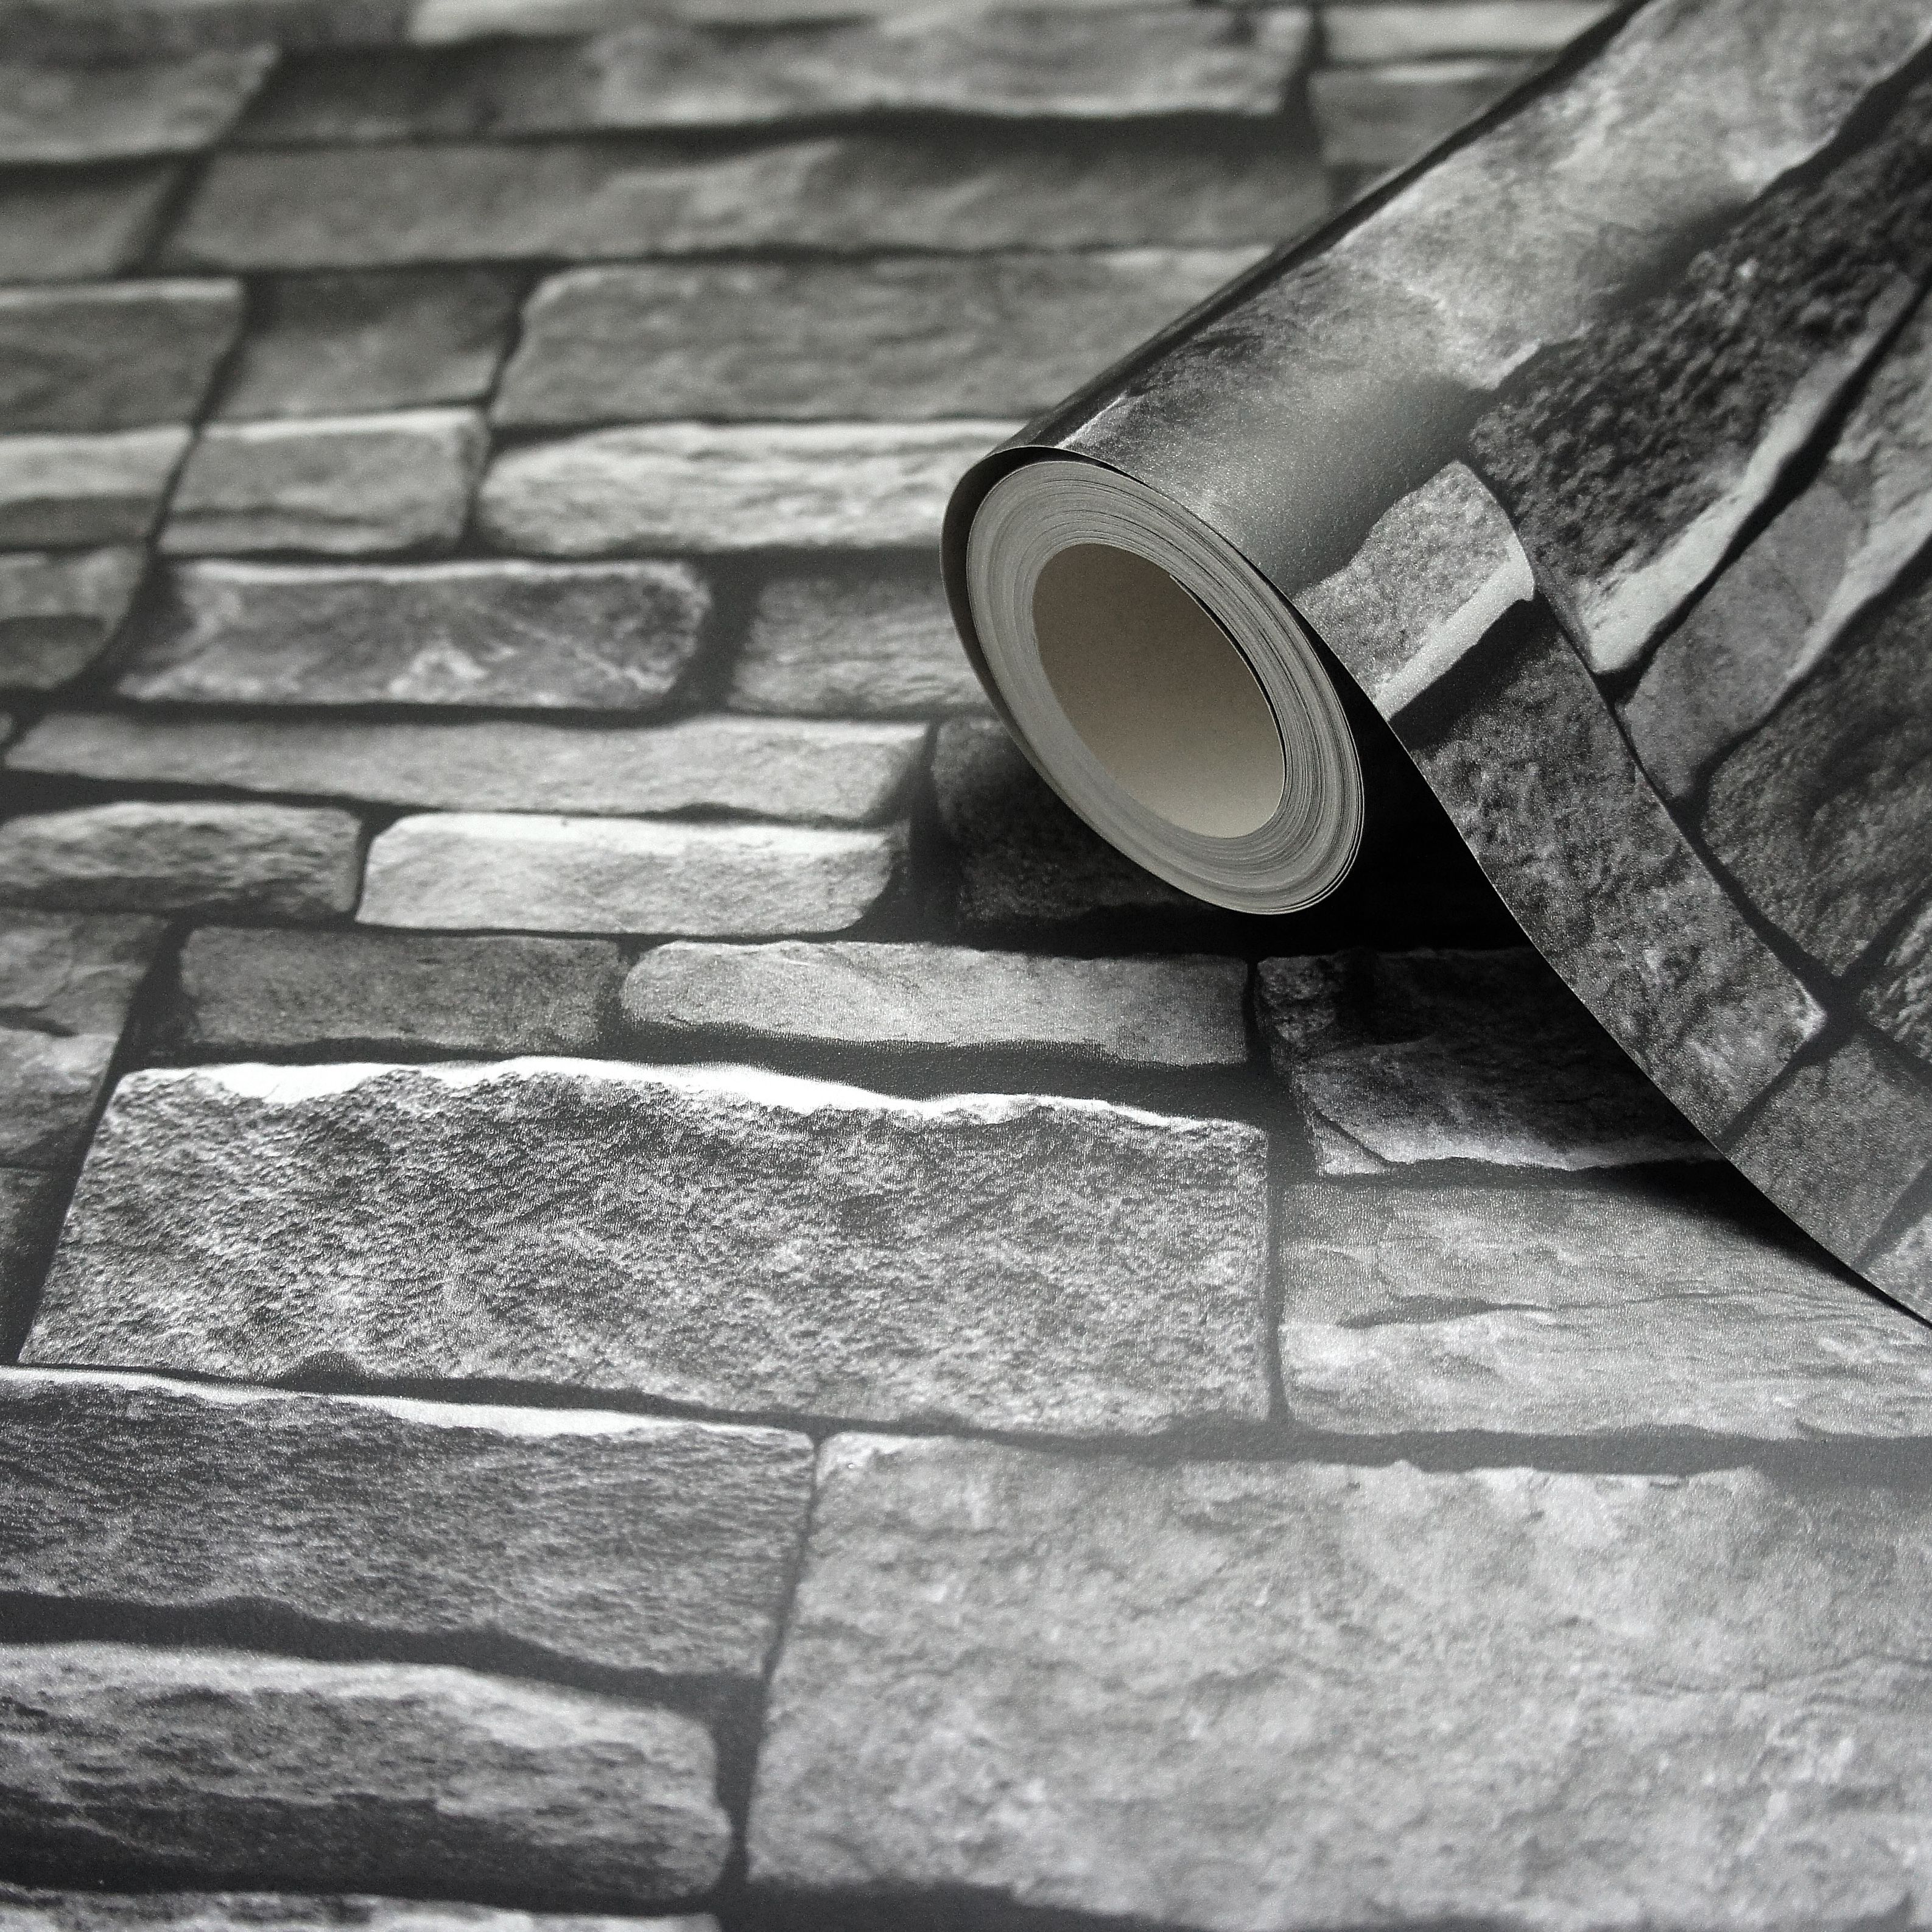 Arrou Slate Brick Smooth Wallpaper Departments Diy At B Q Images, Photos, Reviews